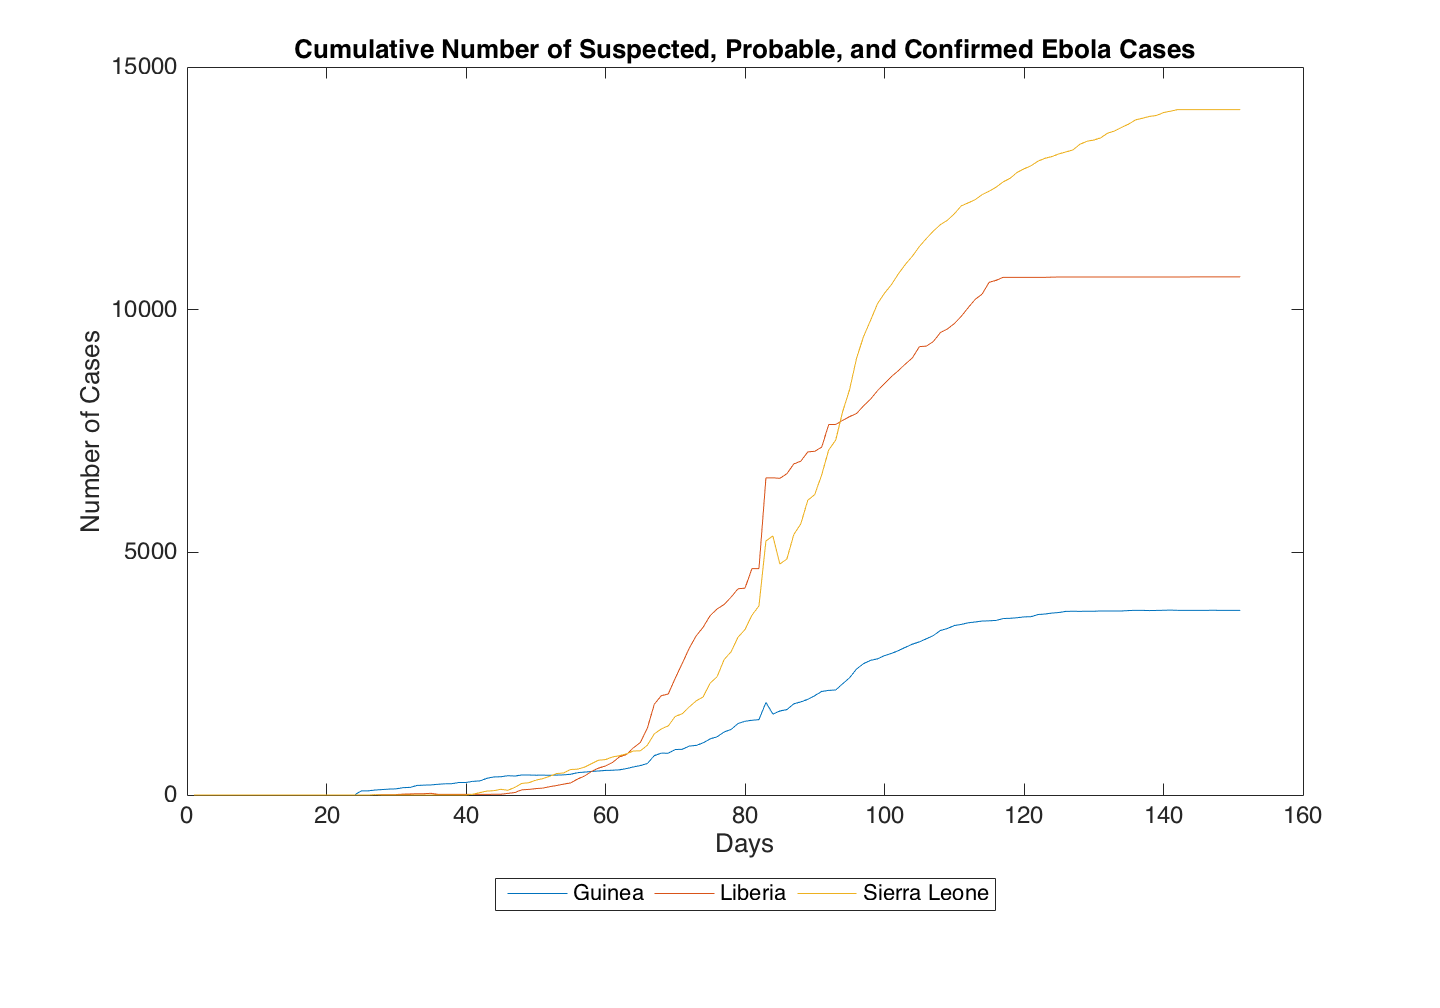 Cumulative Number of Ebola Cases